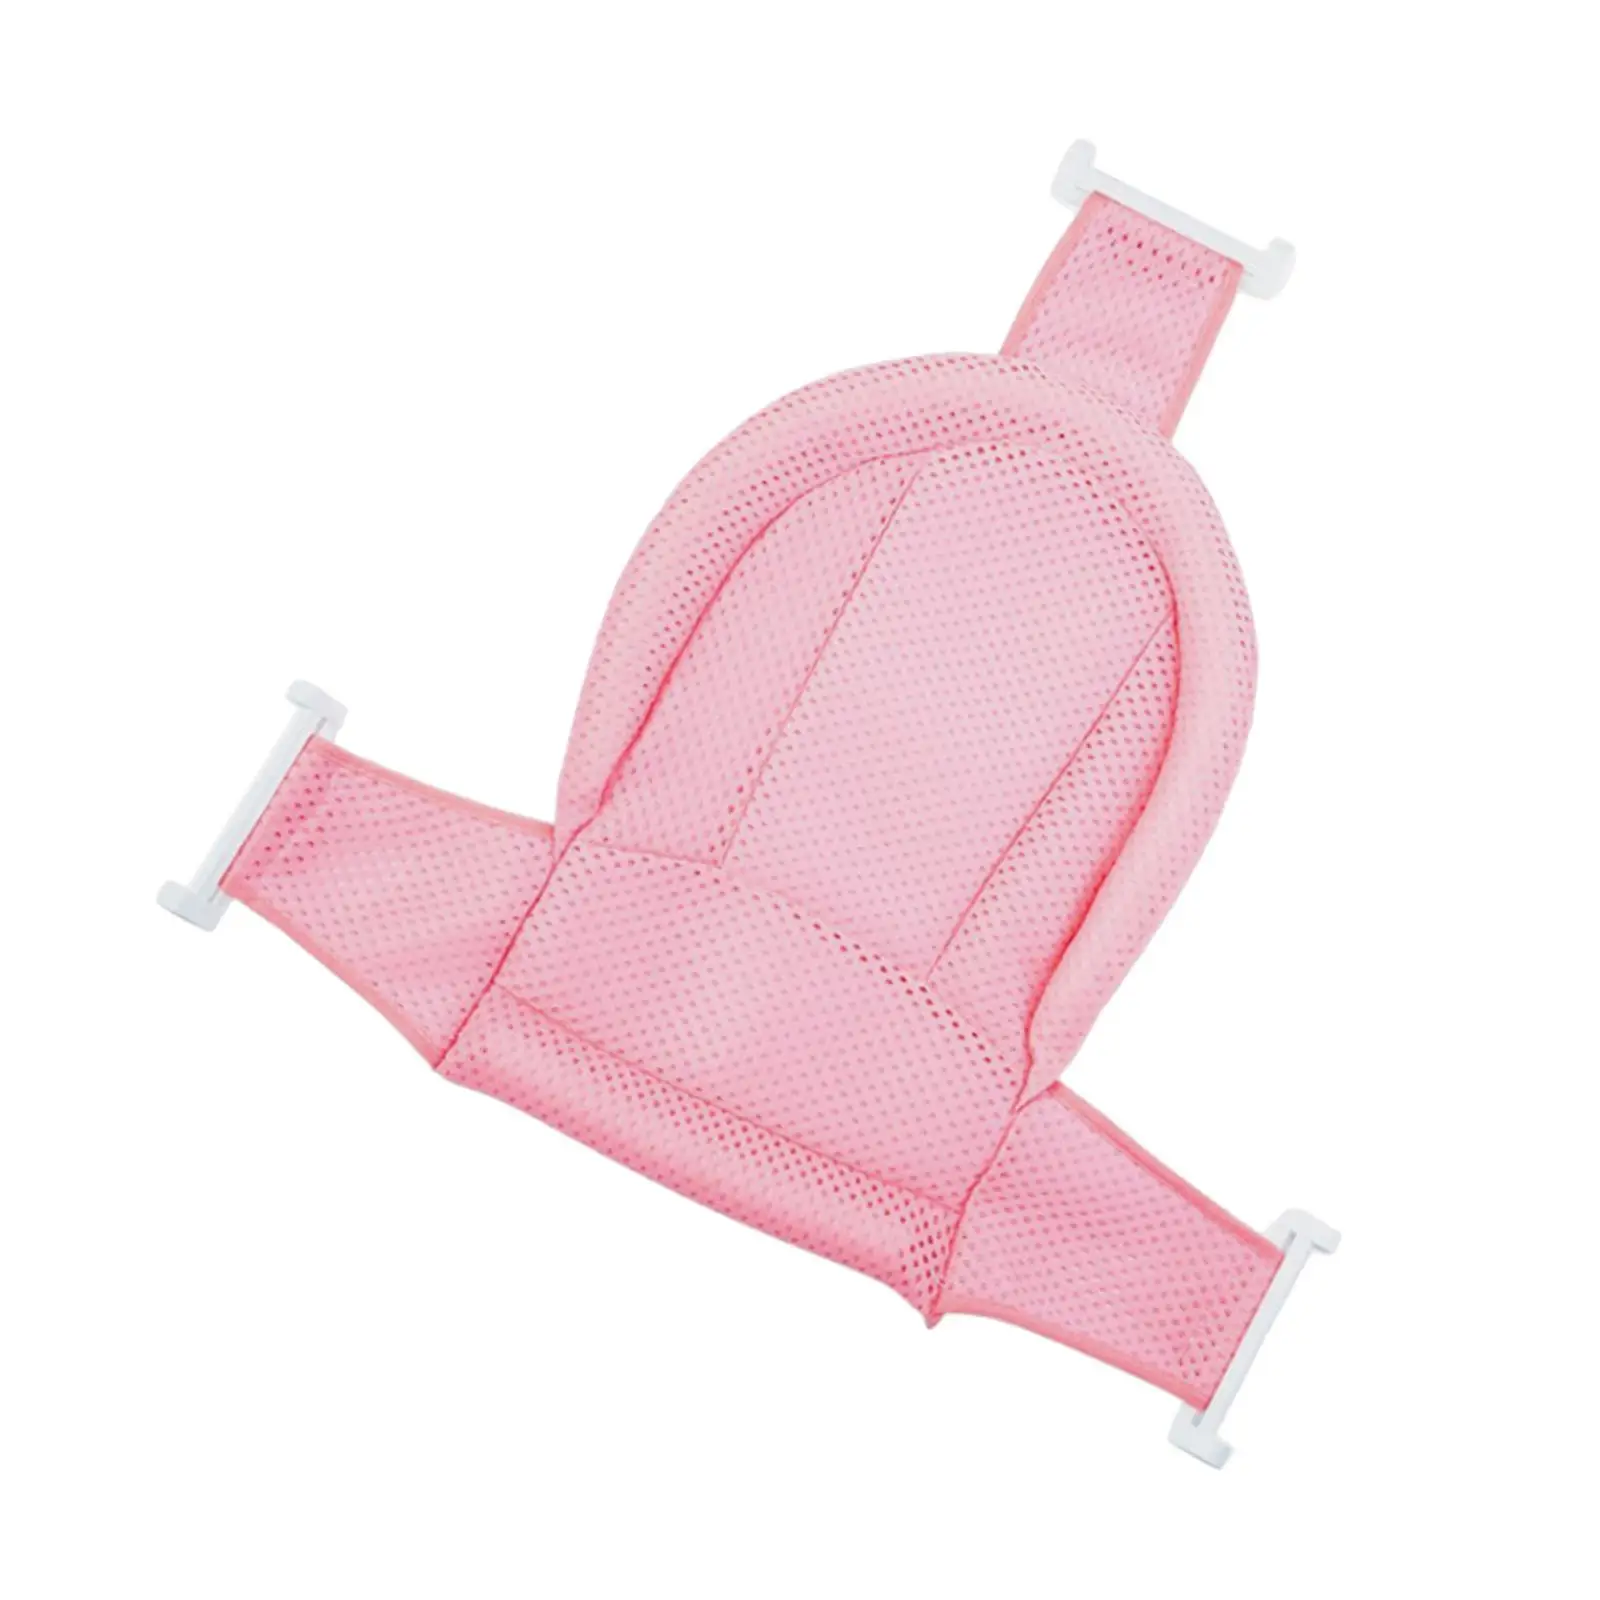 Baby Bath Seat Support Net Baby Shower Mat Adjustable Non Slip First Year Needs Newborn Bathtub Mesh Mat for Newborn Boy Girl